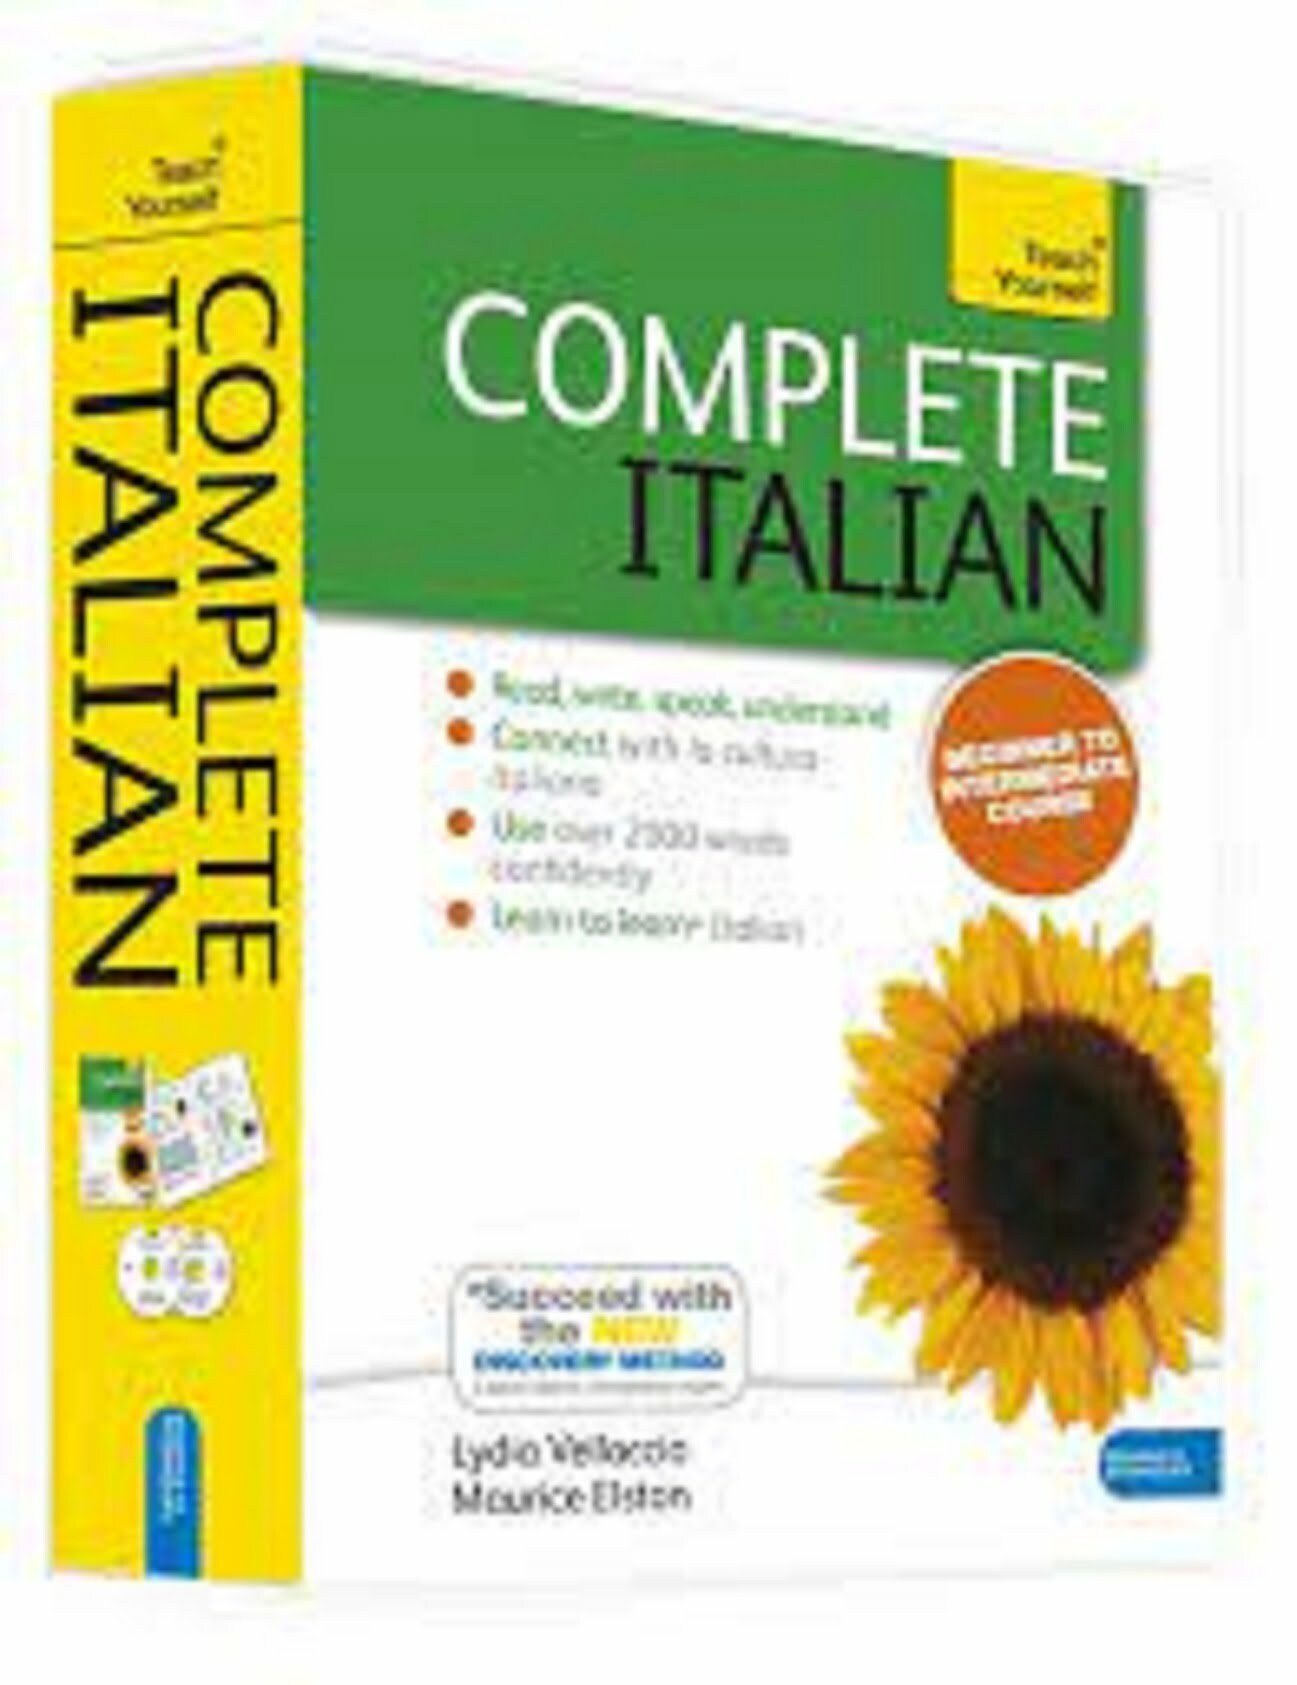 Complete Italian Course